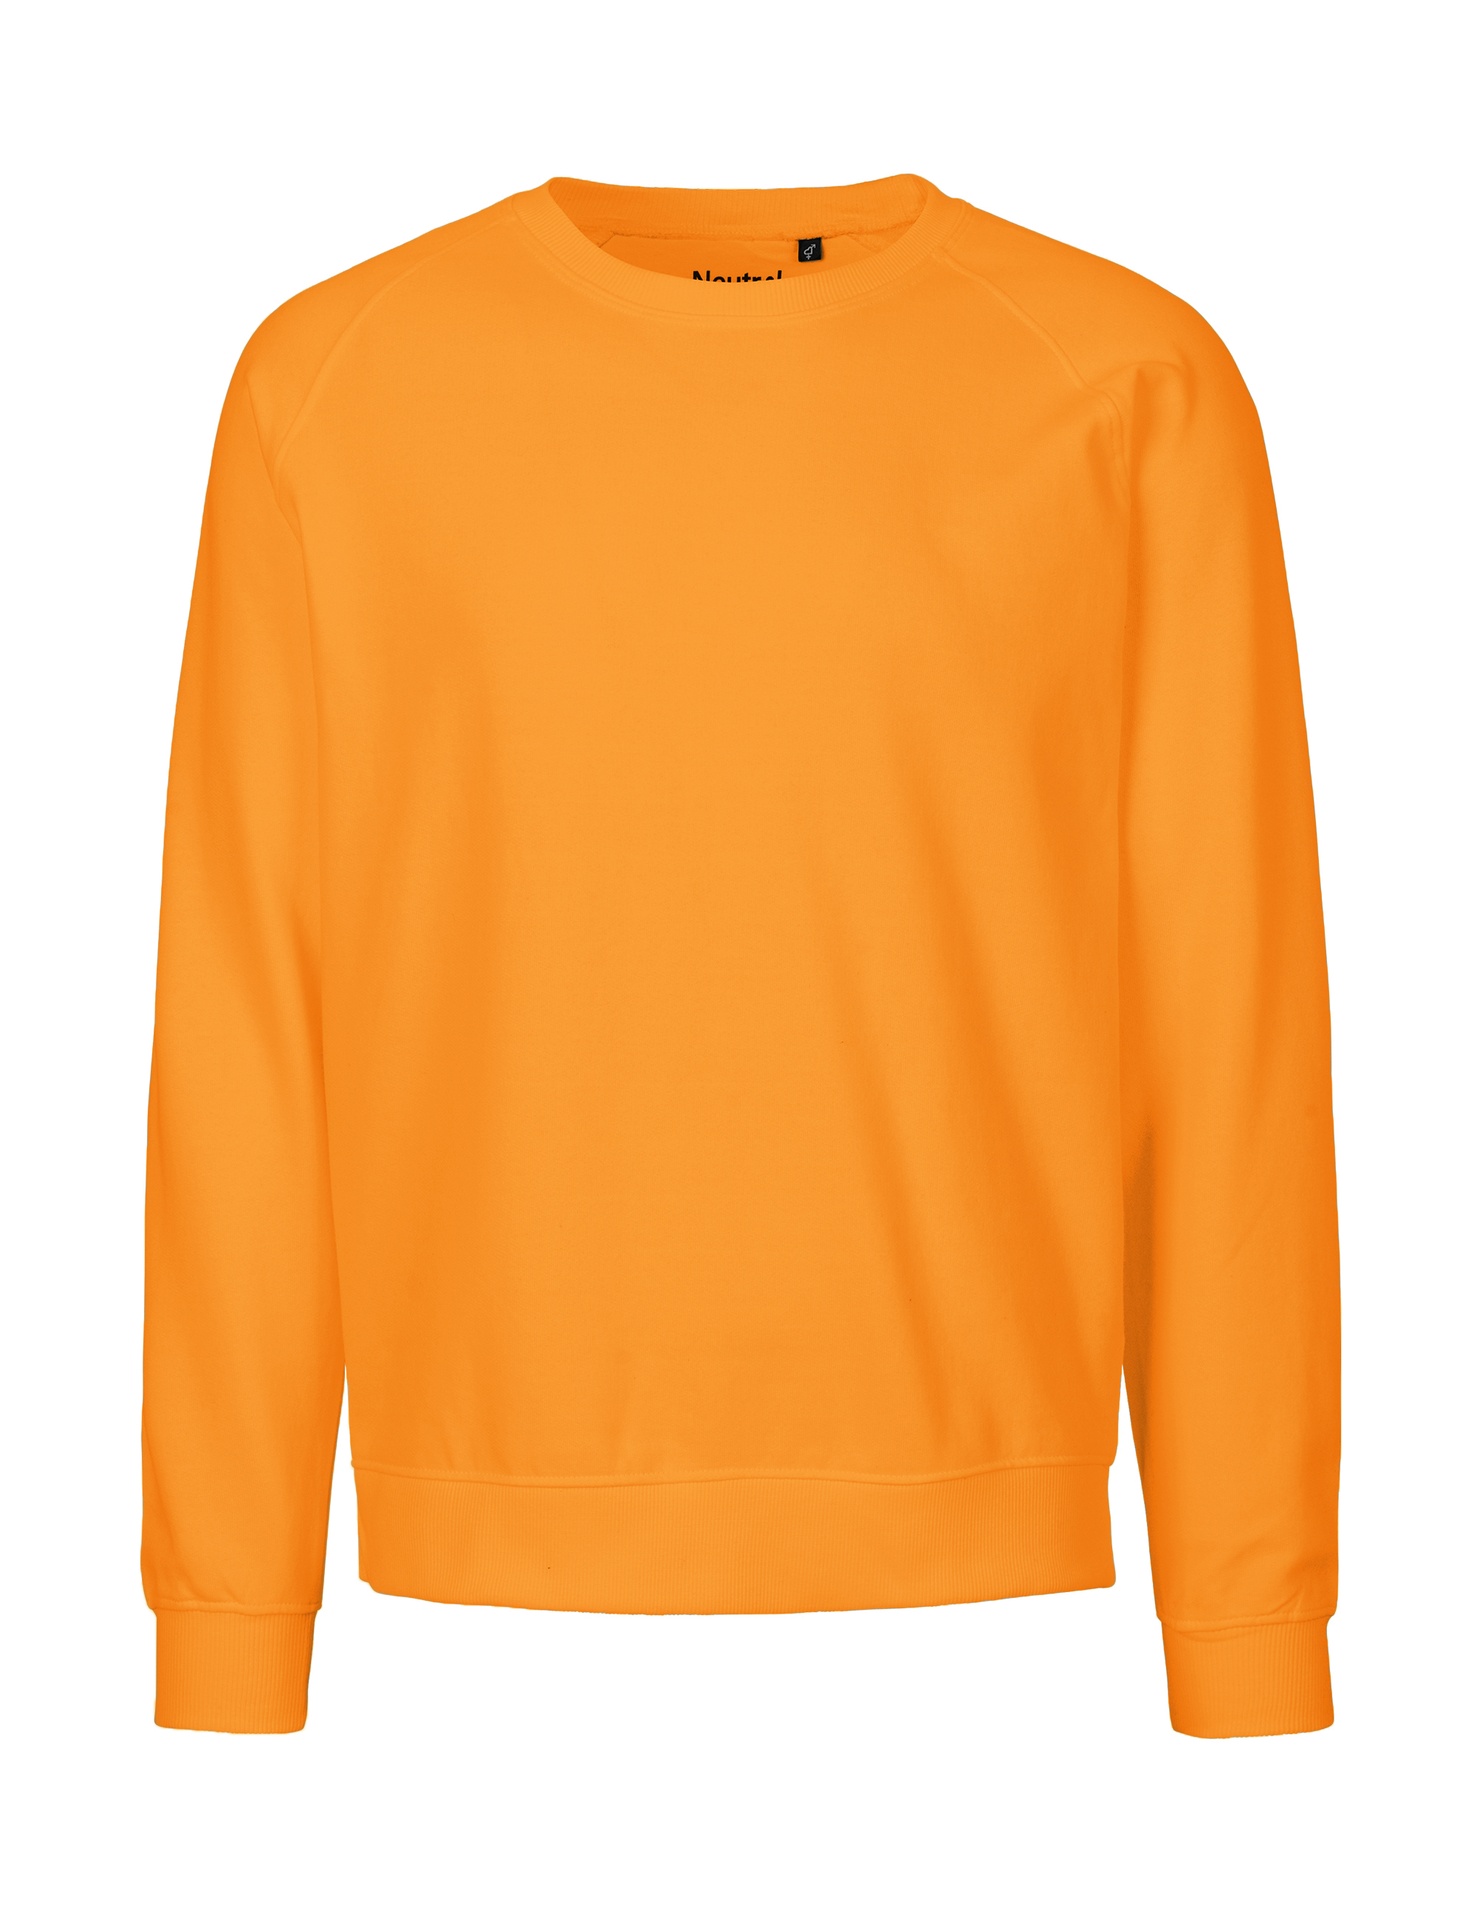 [PR/02789] Unisex Sweatshirt (Okay Orange 31, M)